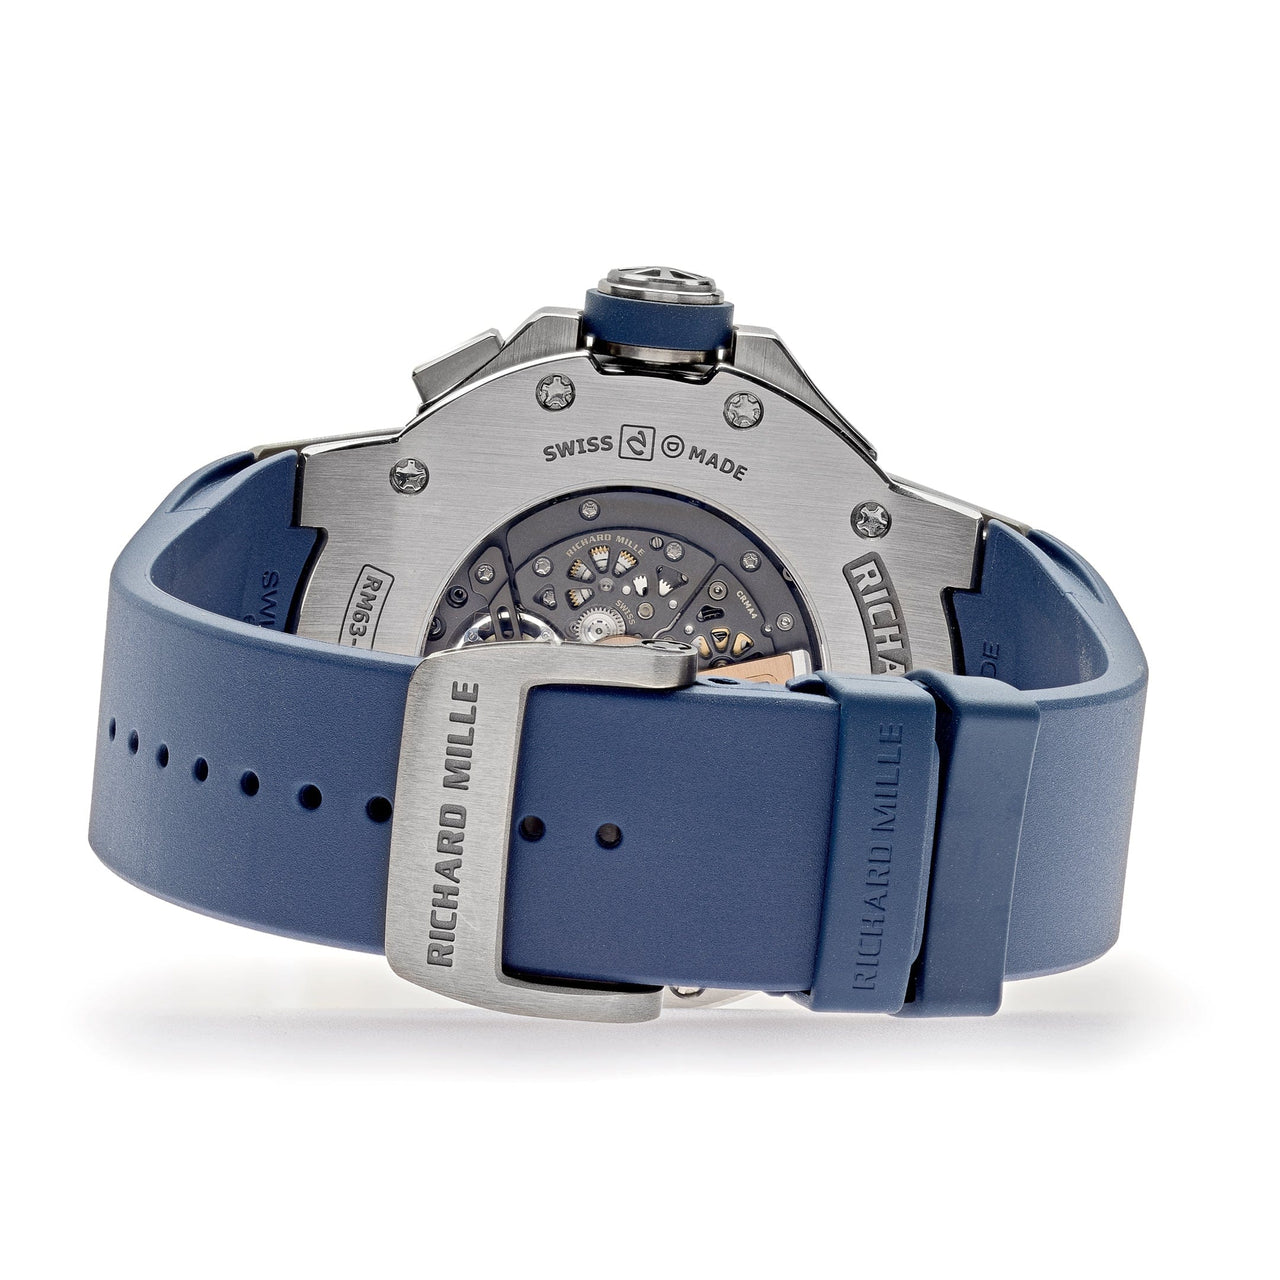 Luxury Watch Richard Mille Automatic Winding Worldtimer Titanium RM 63-02 Wrist Aficionado